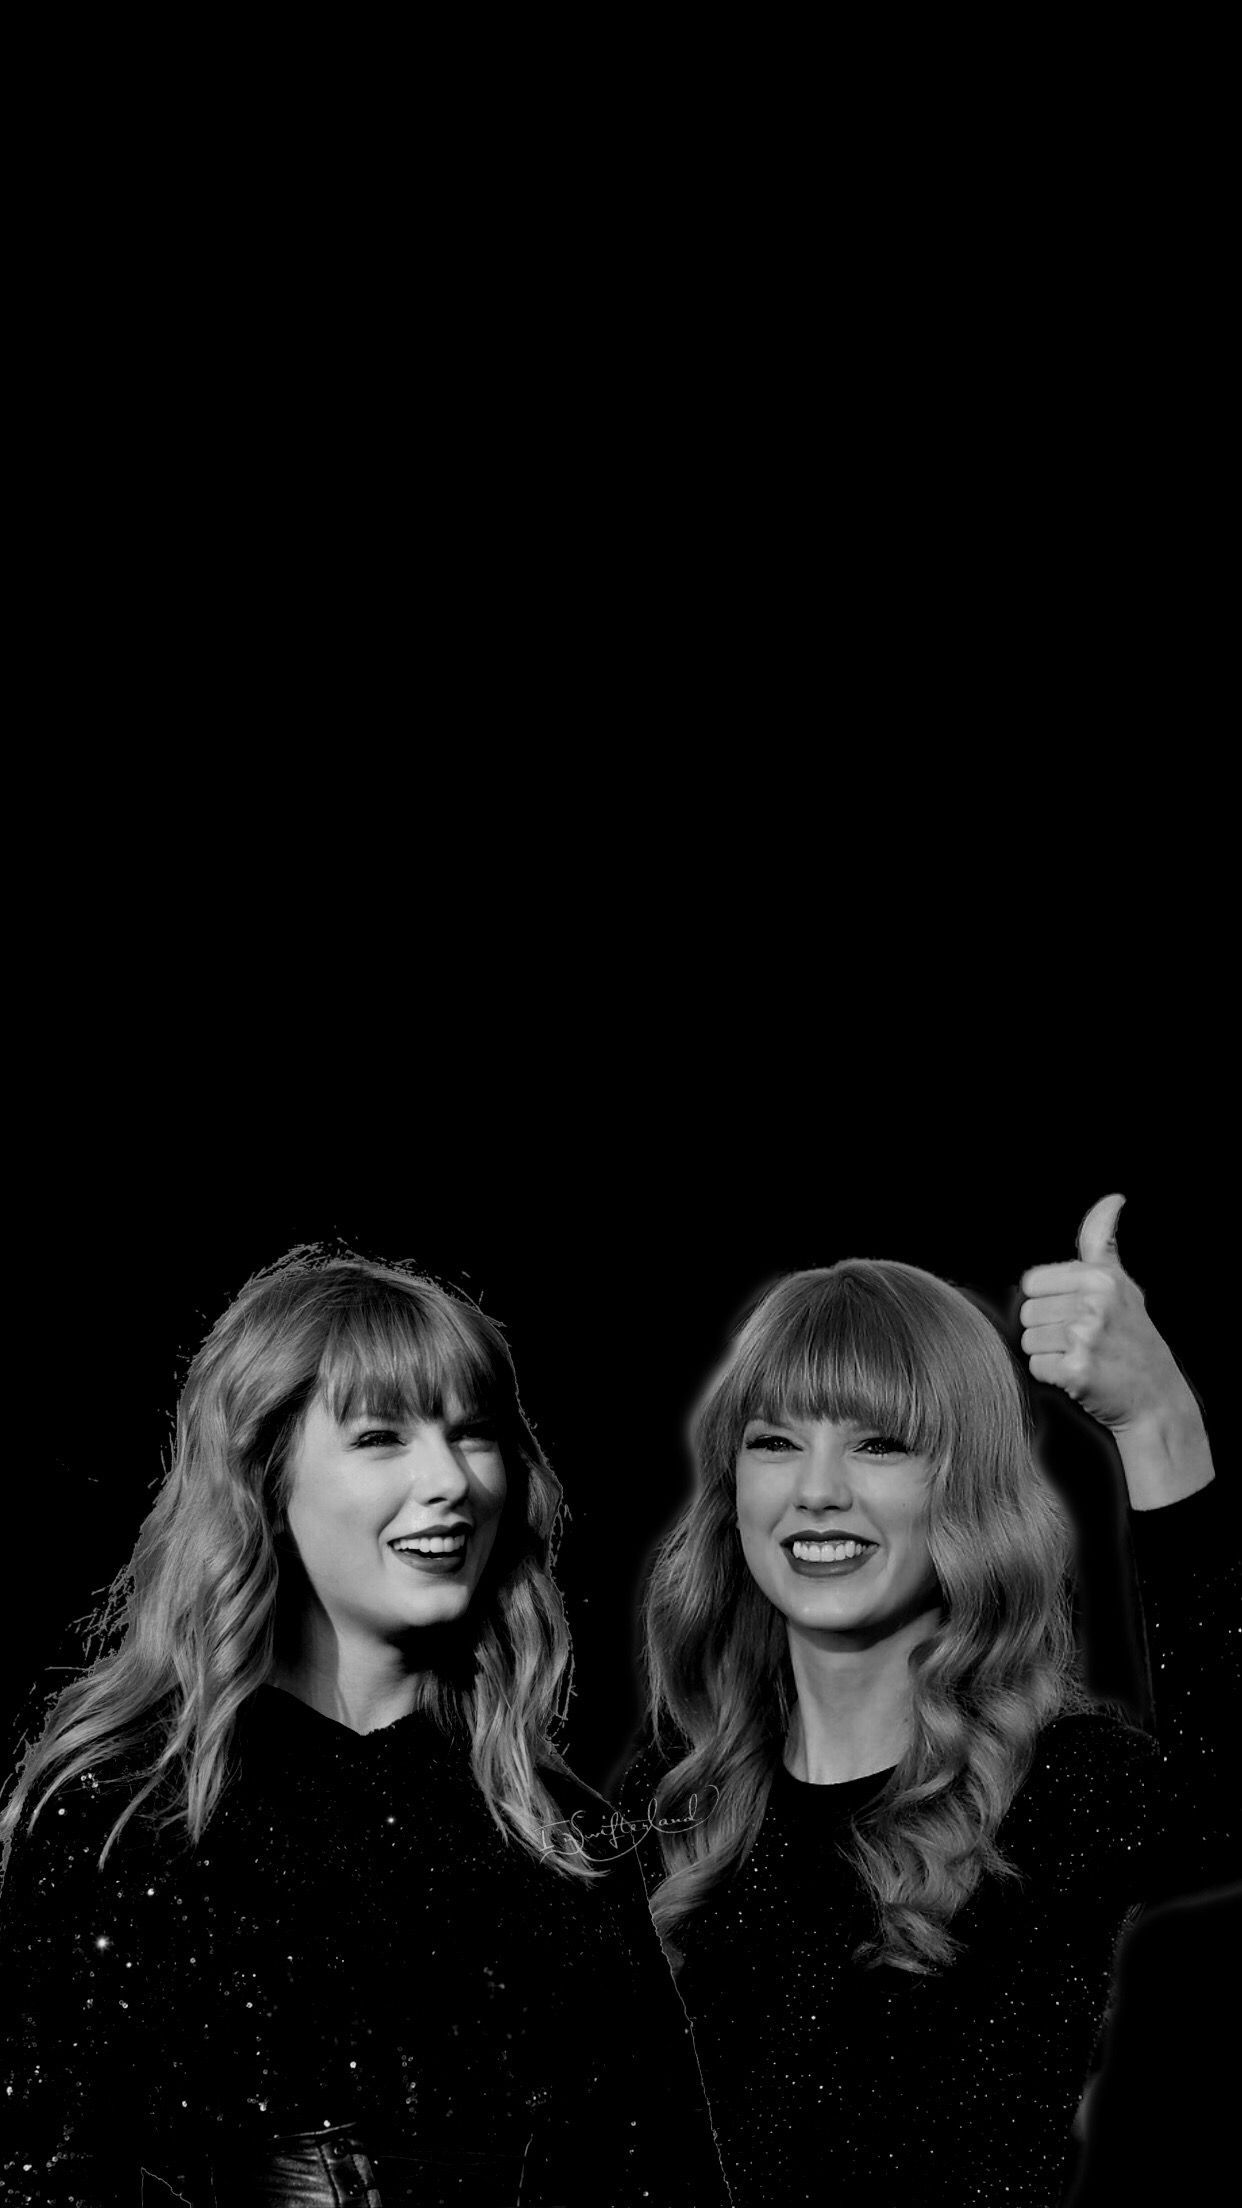 Taylor Swift Wallpaper. Taylor swift smile, Taylor swift wallpaper, Taylor swift album